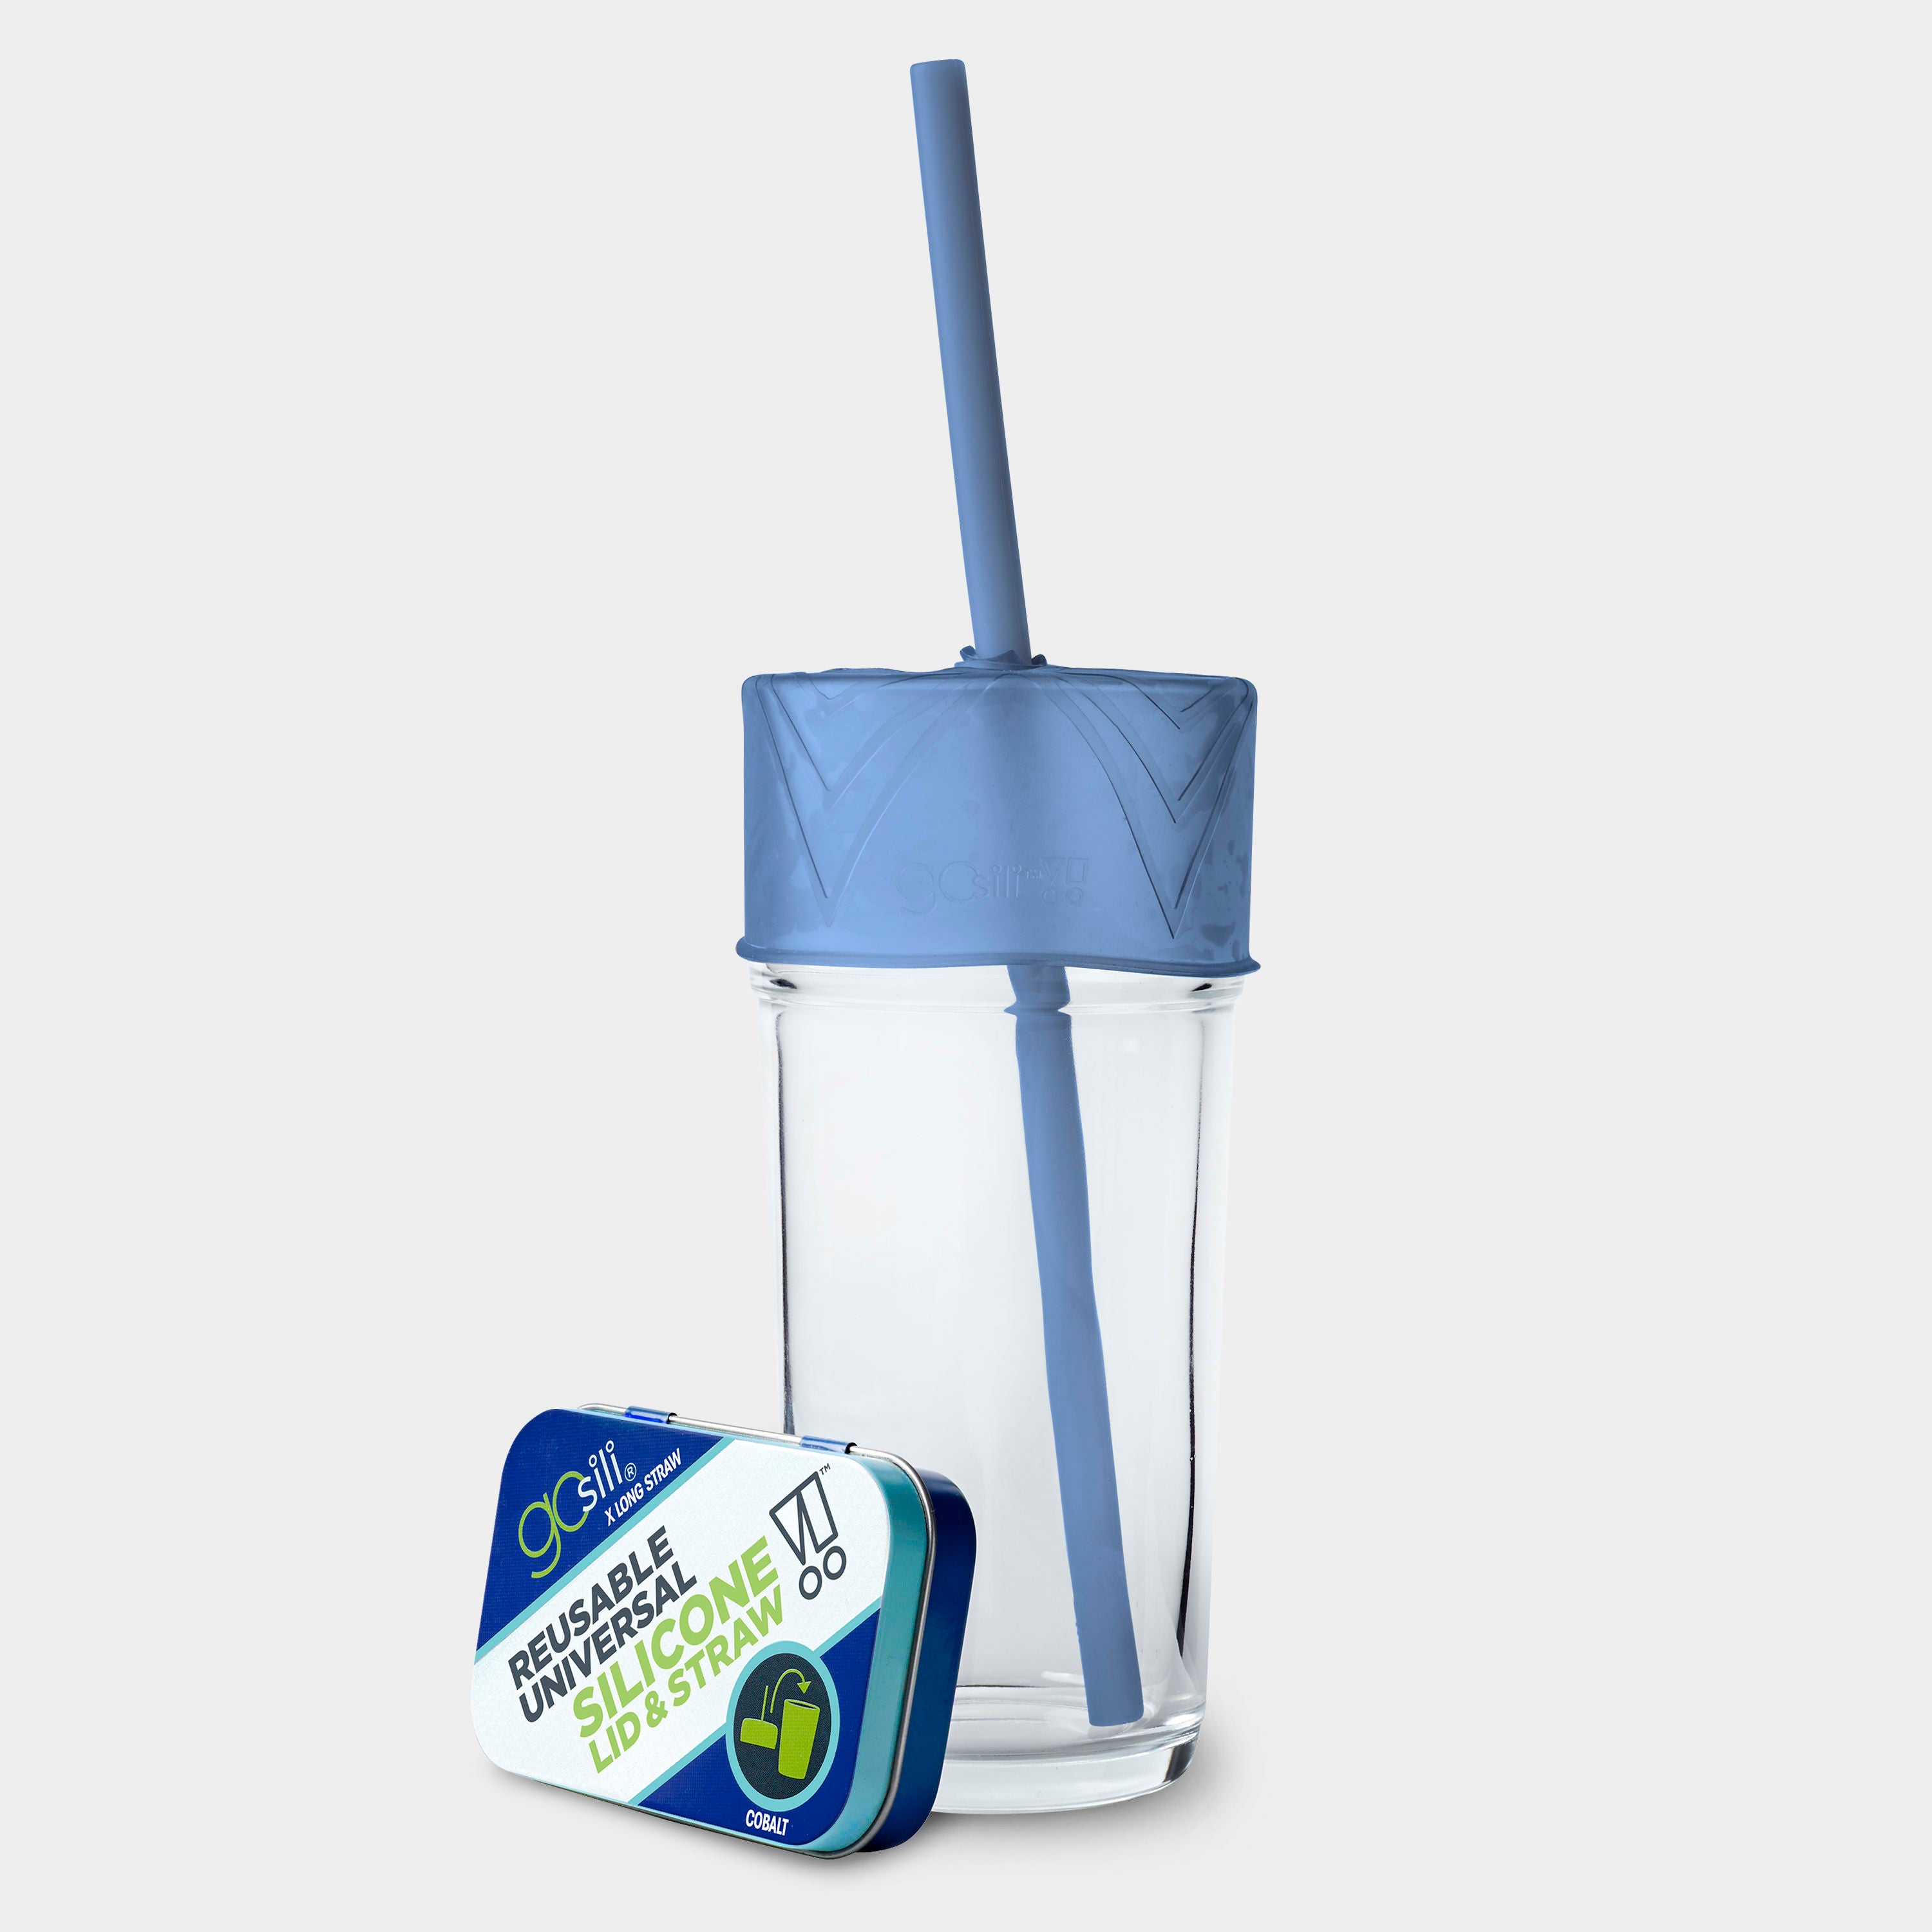 Reusable Drink Cup, Lids & Straws Set 3pk 16oz Dishwasher Safe FREE SHIPPING